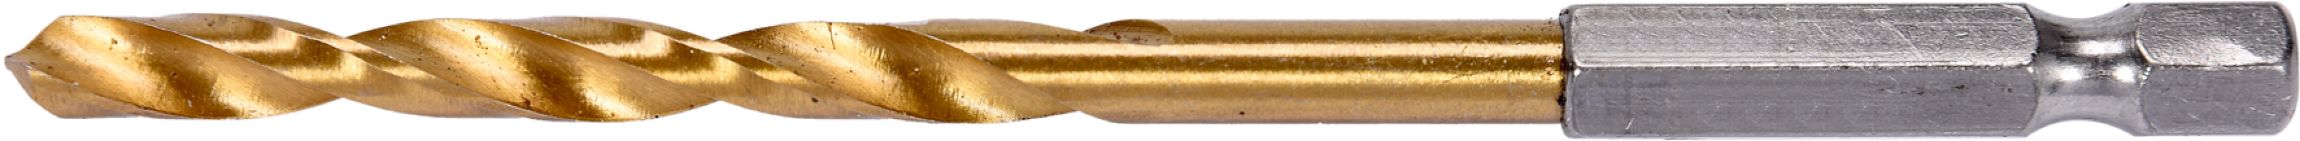 Vrtk do kovu HSS-titan 6,0mm se estihranou stopkou 1/4" Yato YT-44764